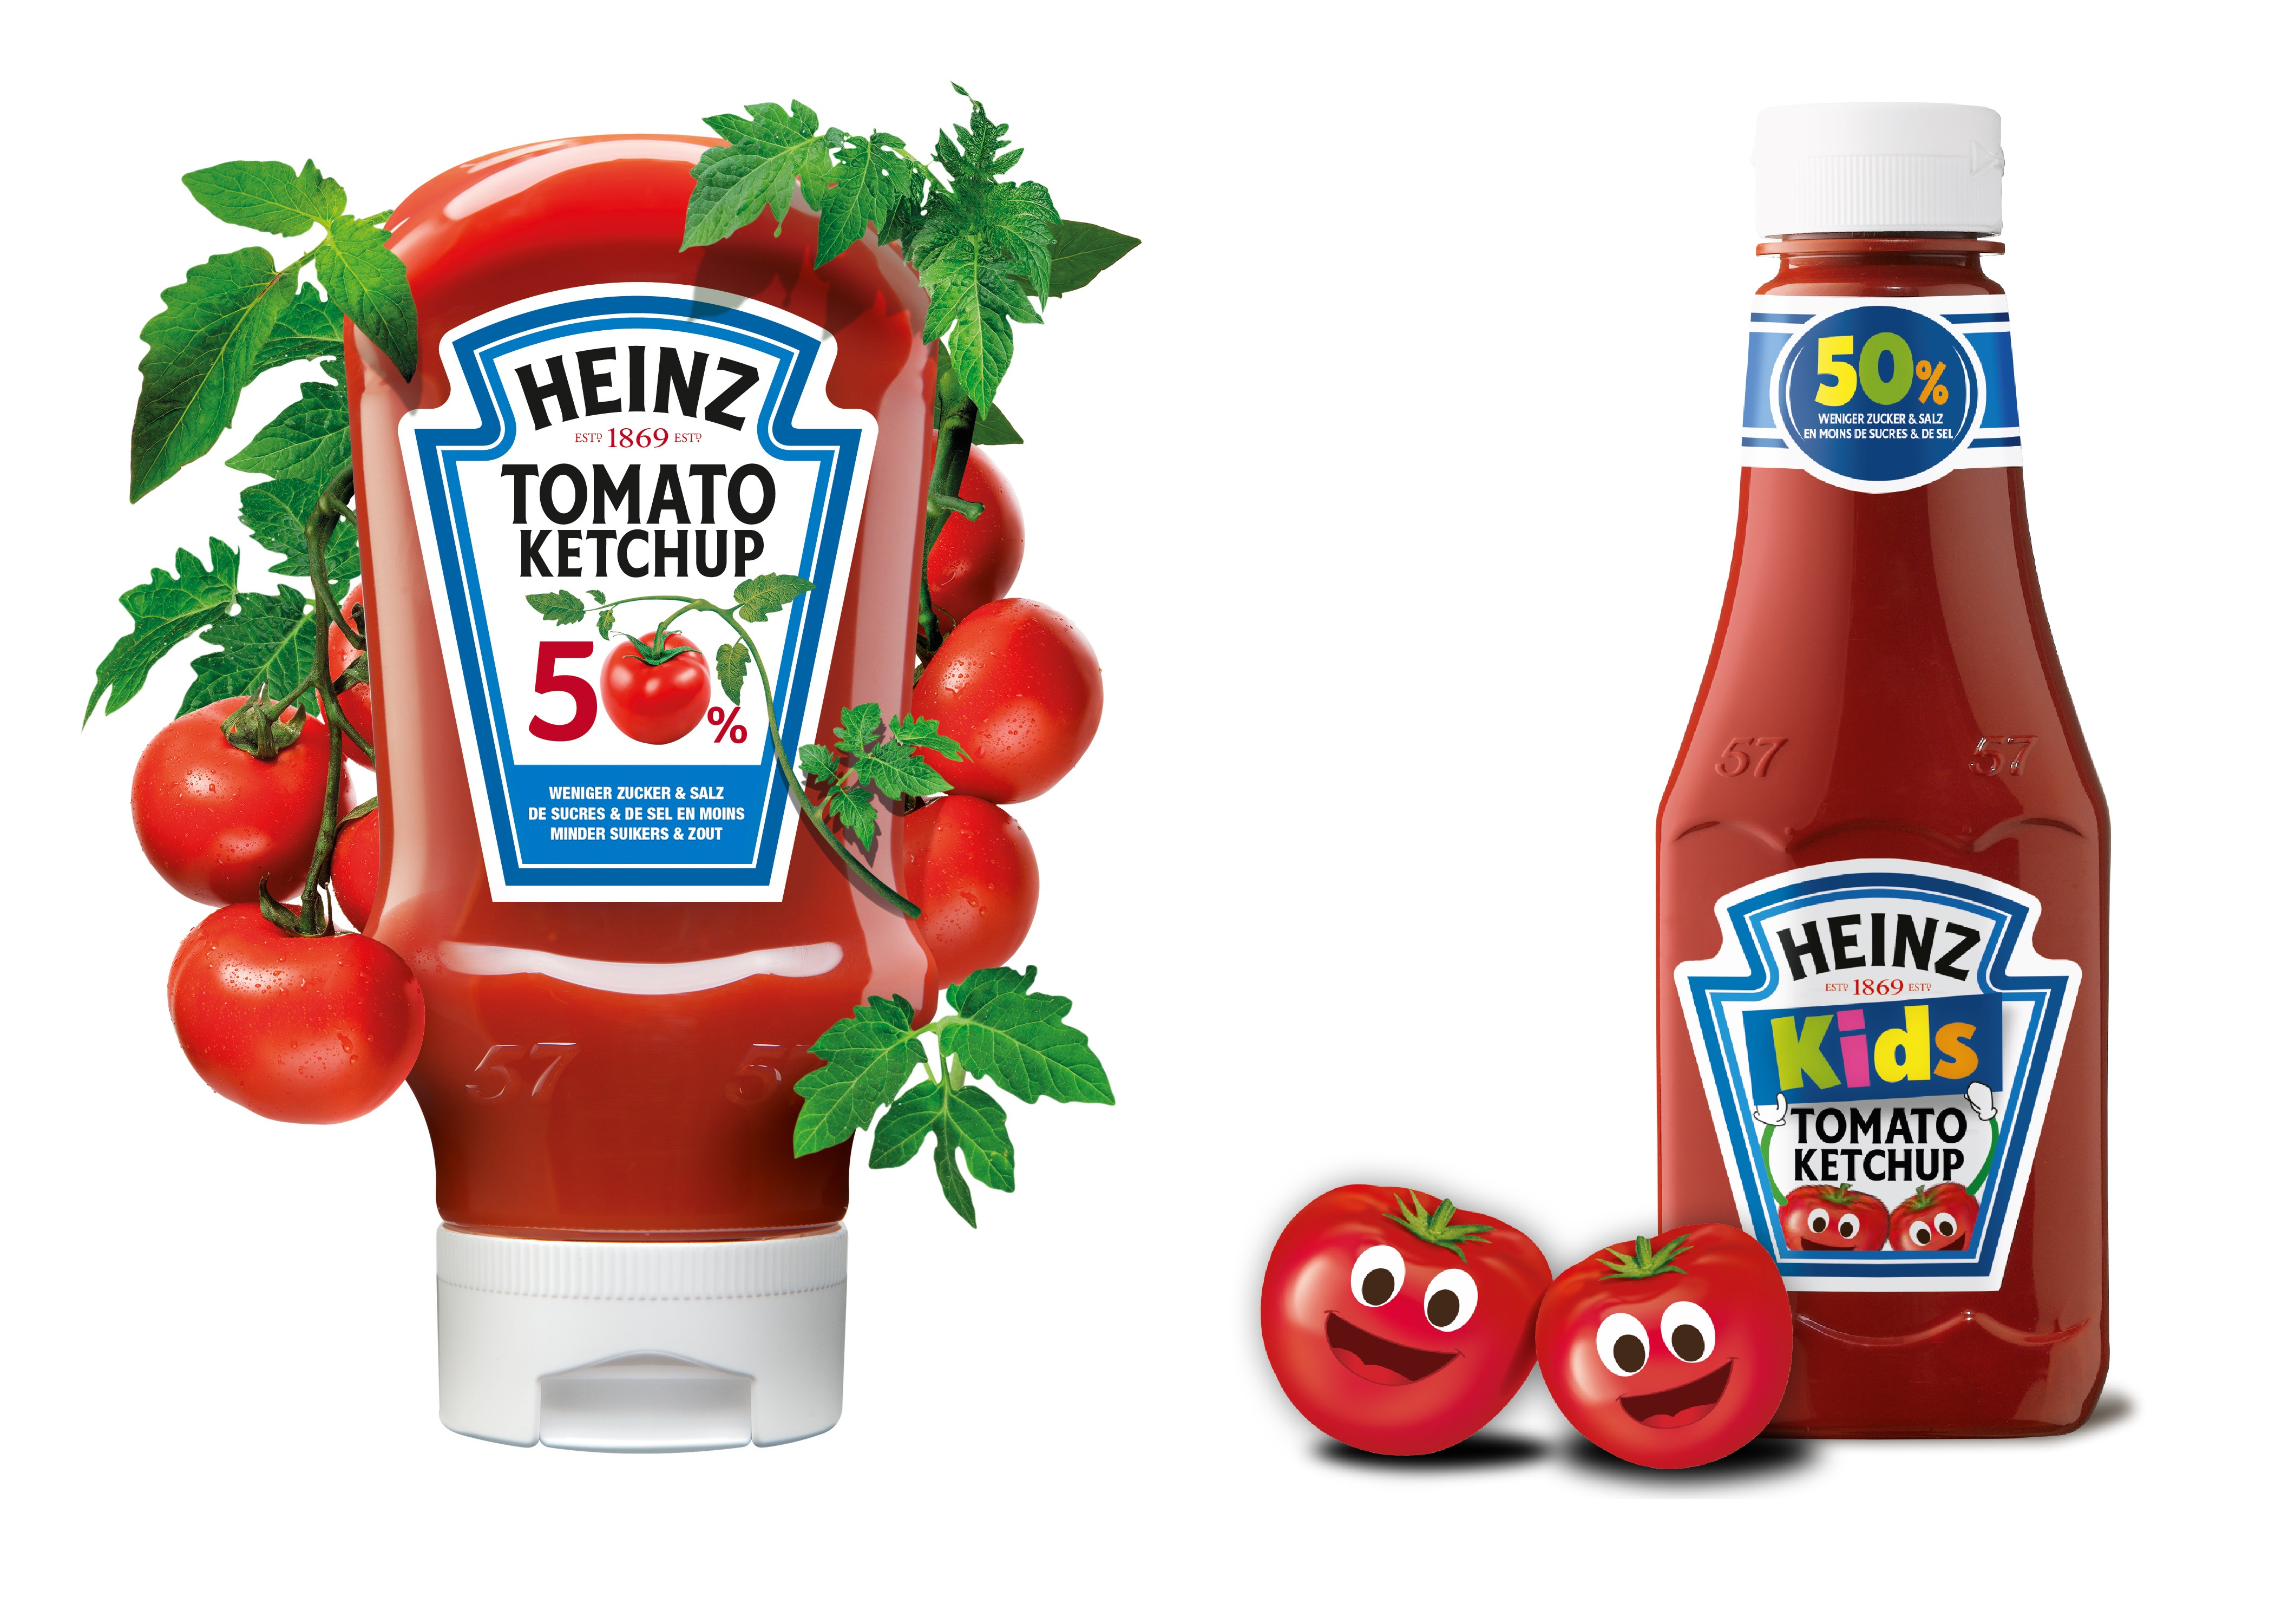 Tomato ketchup. Соус Heinz Kids Tomato Ketchup 330мл. Соус Heinz Kids Tomato Ketchup 330мл (10). "Ketchup ""Heinz"" Tomato 570g  ". Кетчуп Хайнц томатный производитель.